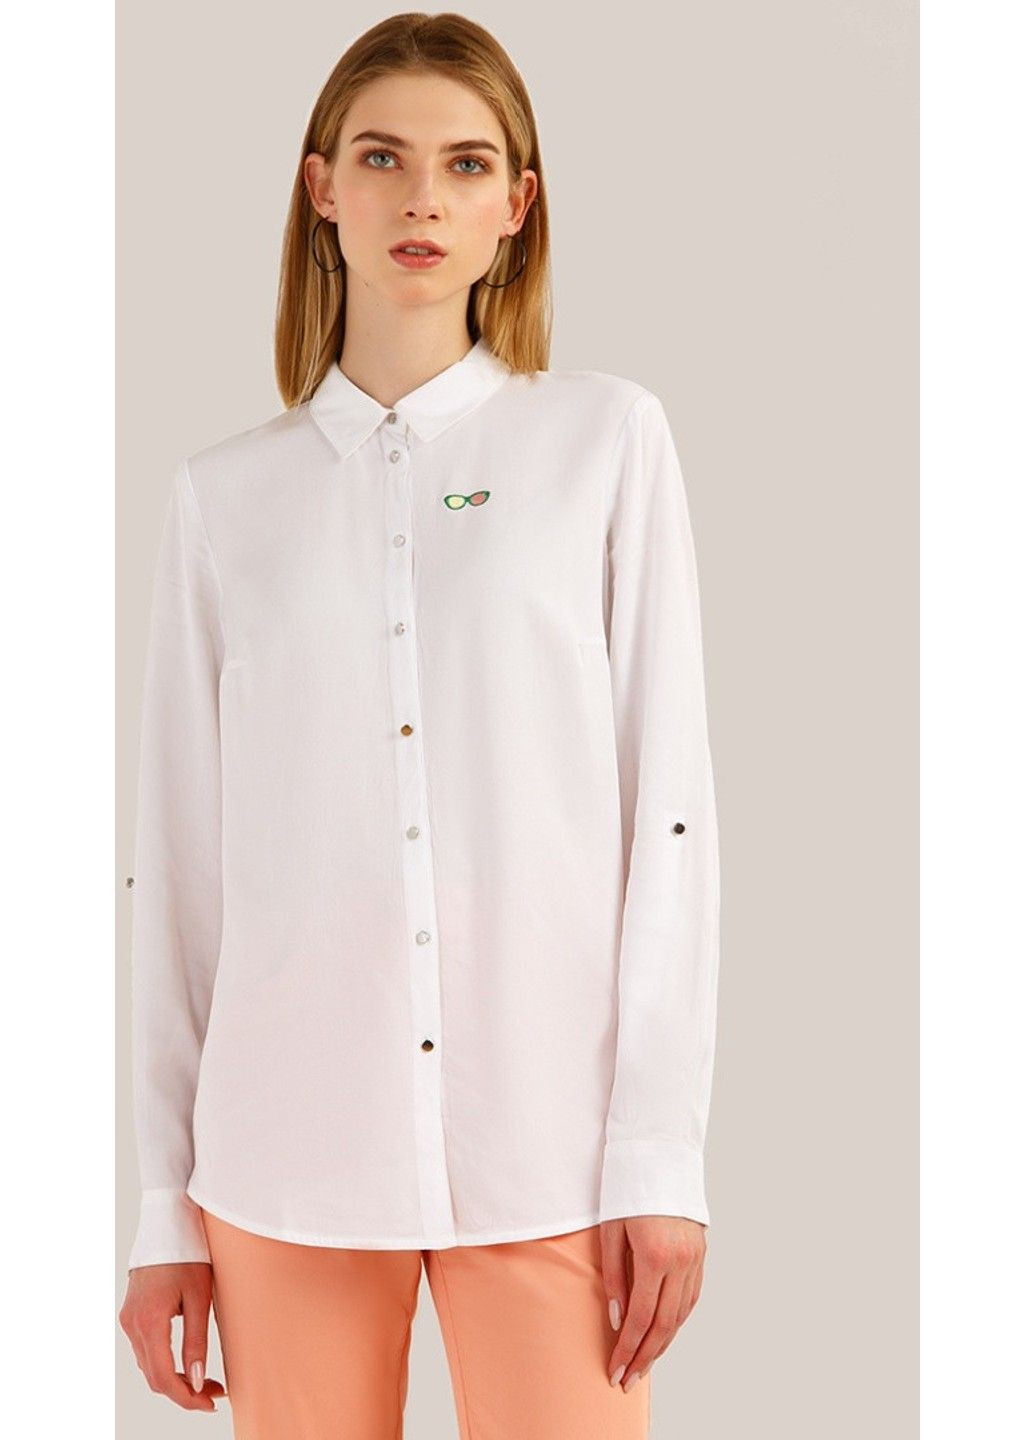 Белая летняя рубашка s19-14010-201 Finn Flare